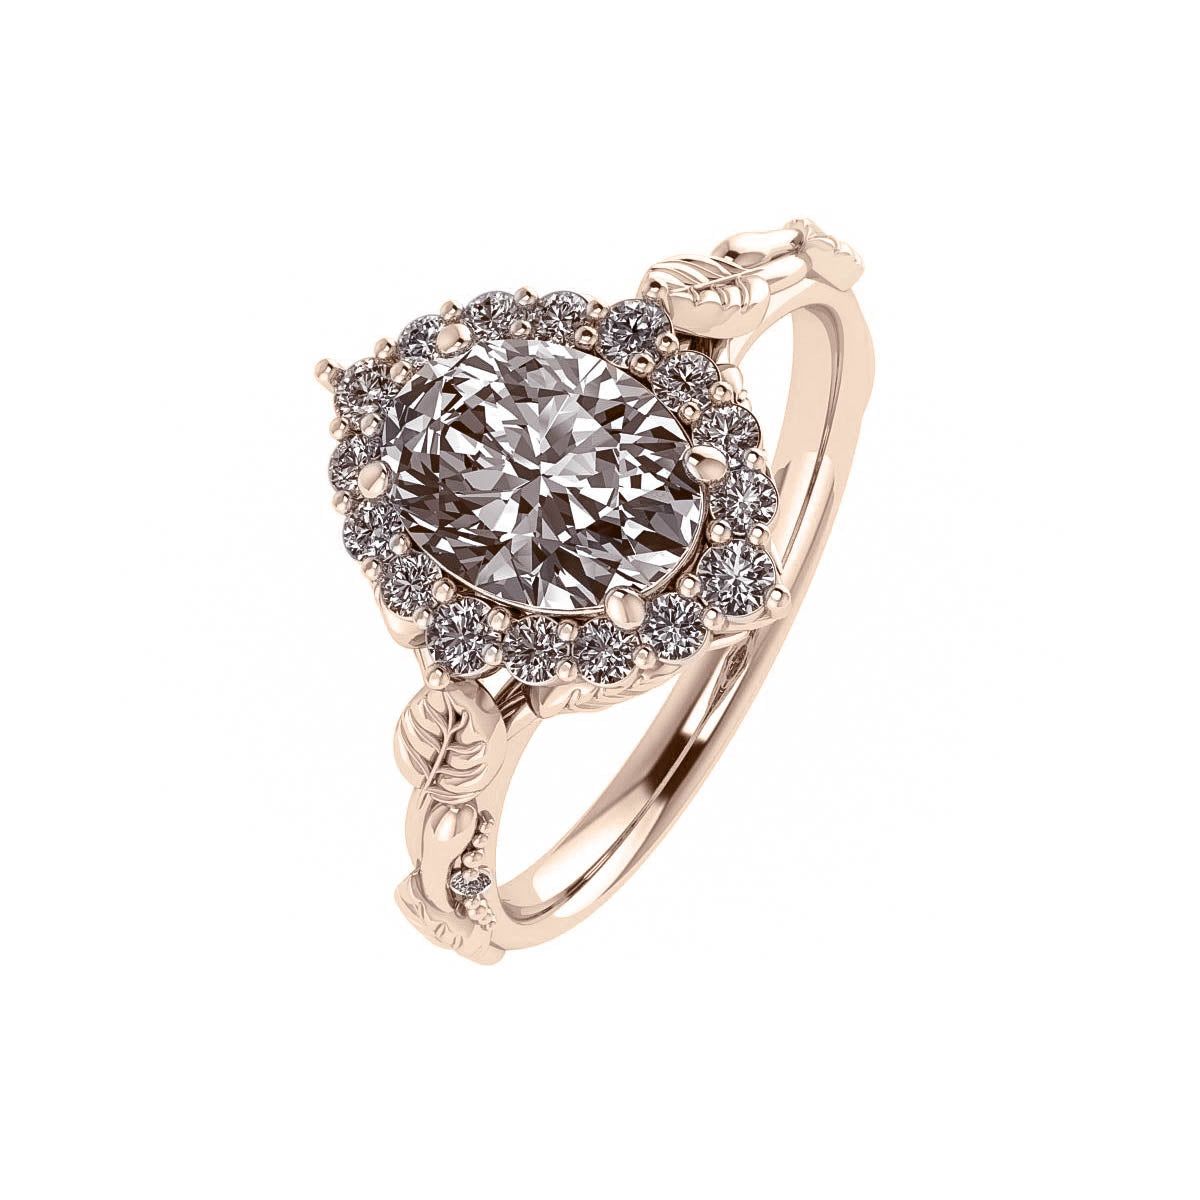 Florentina | custom engagement ring with oval cut gemstone 8x6 mm - Eden Garden Jewelry™